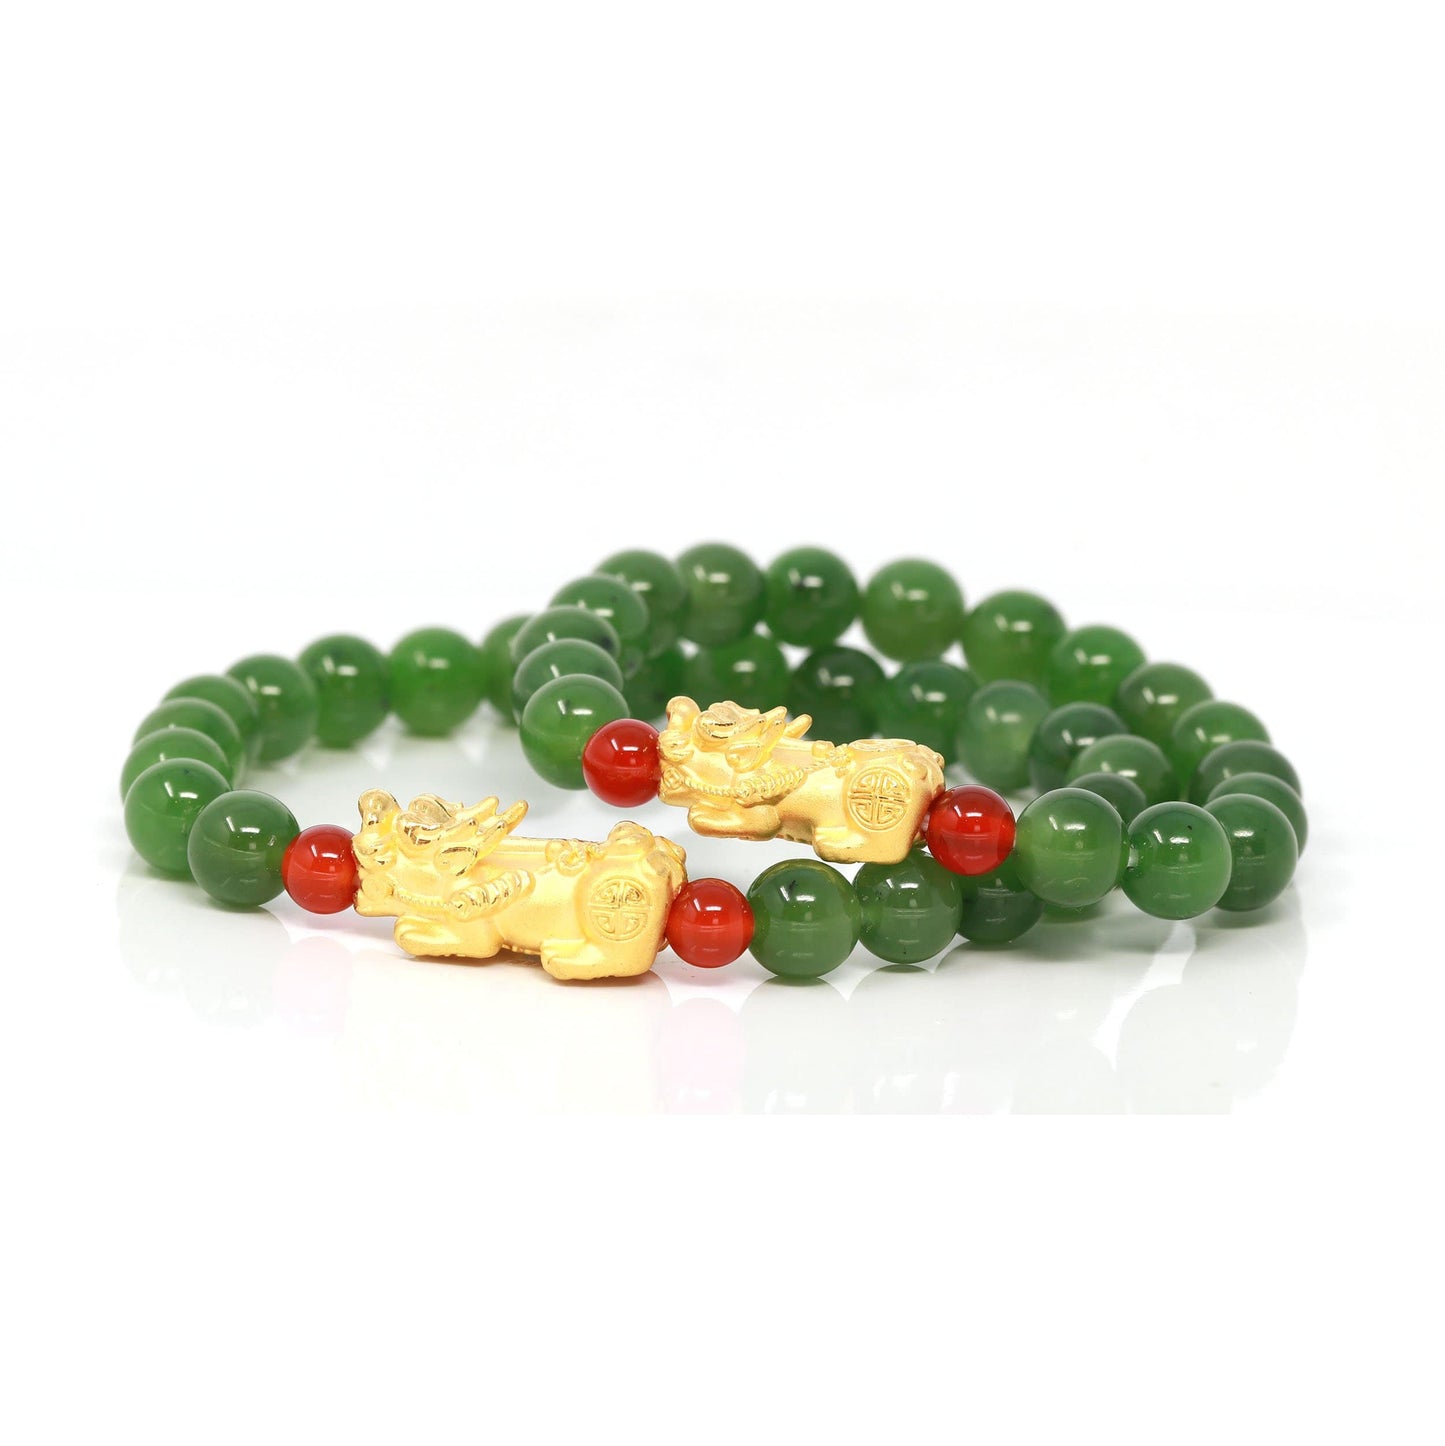 24K Pure Yellow Gold "PiXiu" With Genuine Green Jade Round Beads Bracelet Bangle ( 8 mm )